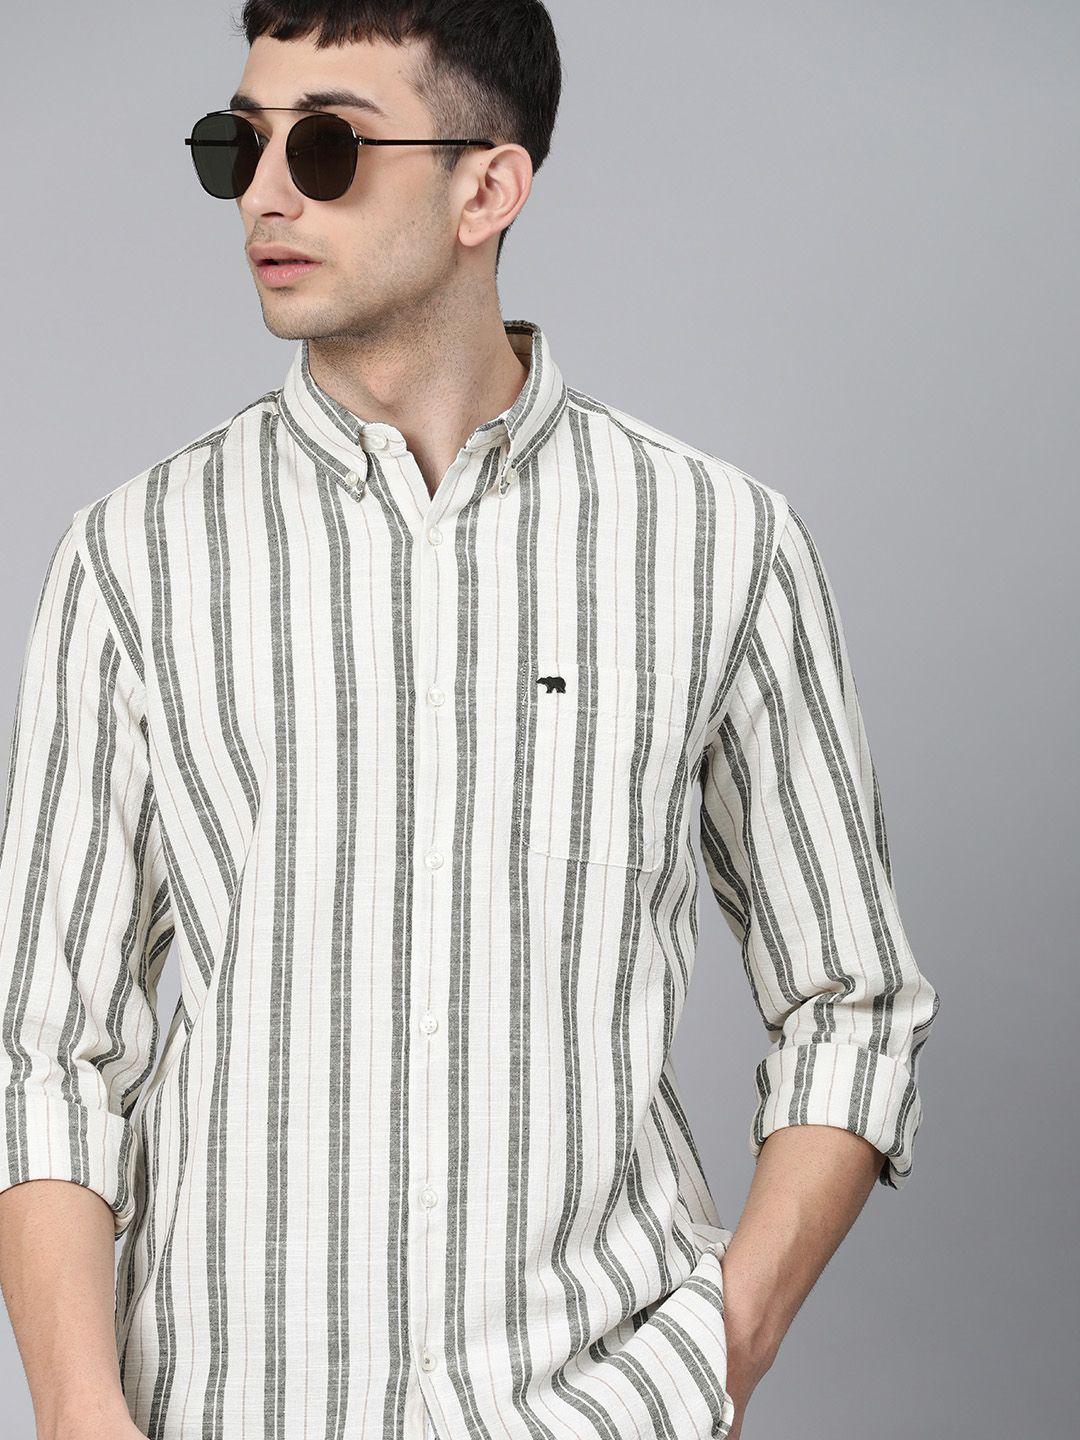 the-bear-house-men-off-white-&-black-slim-fit-striped-casual-linen-shirt